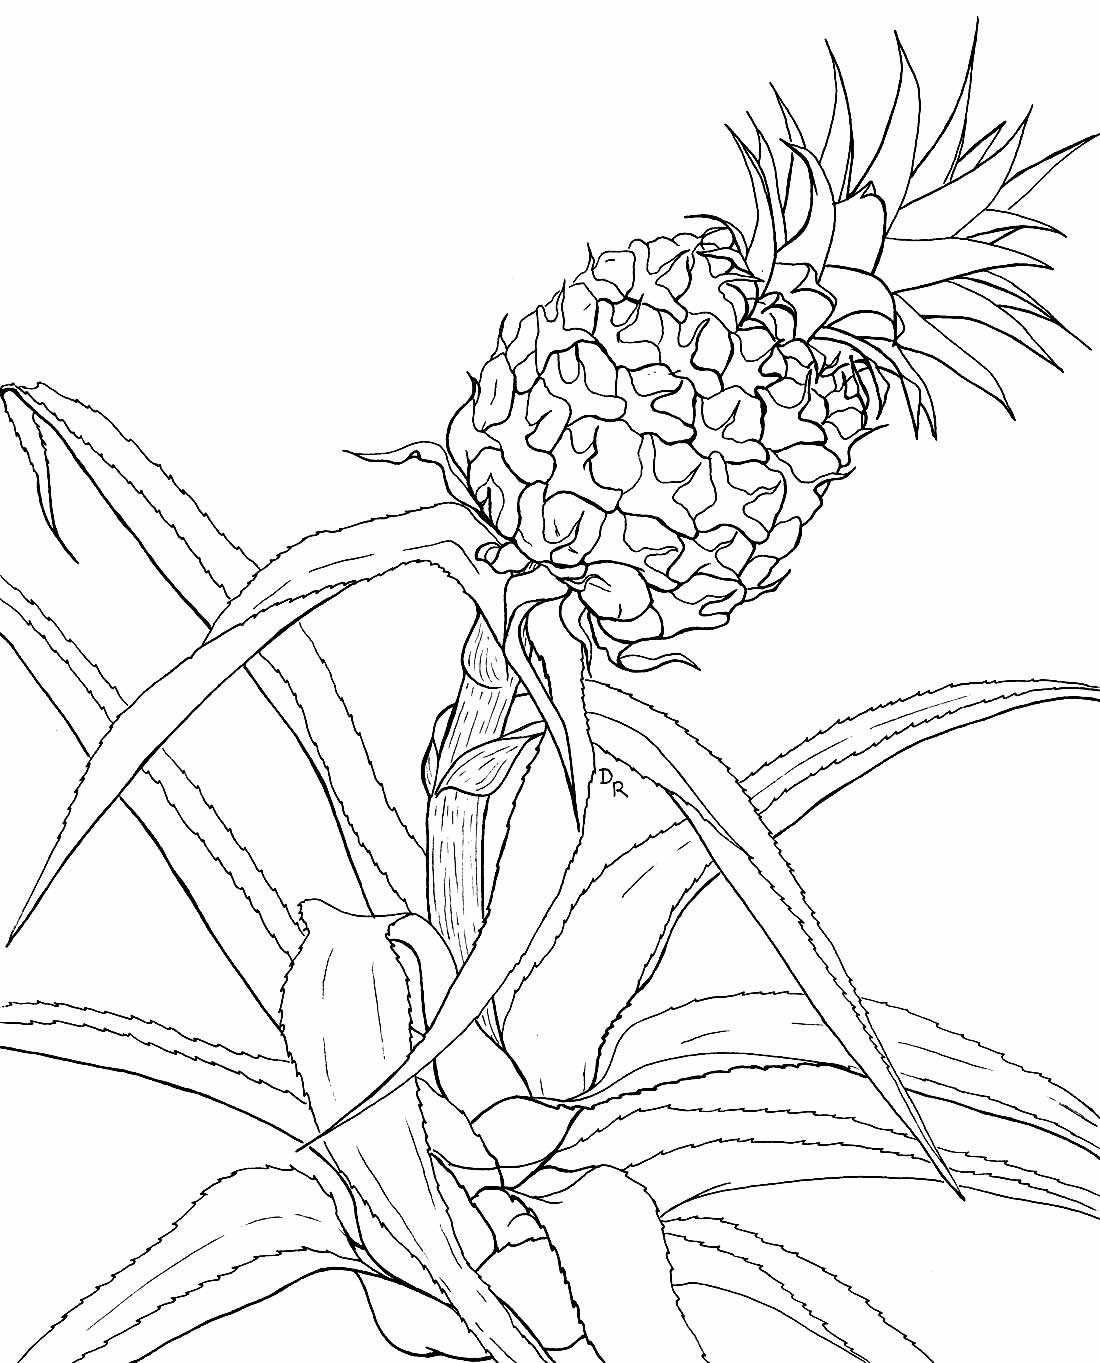 Desenho de abacaxi